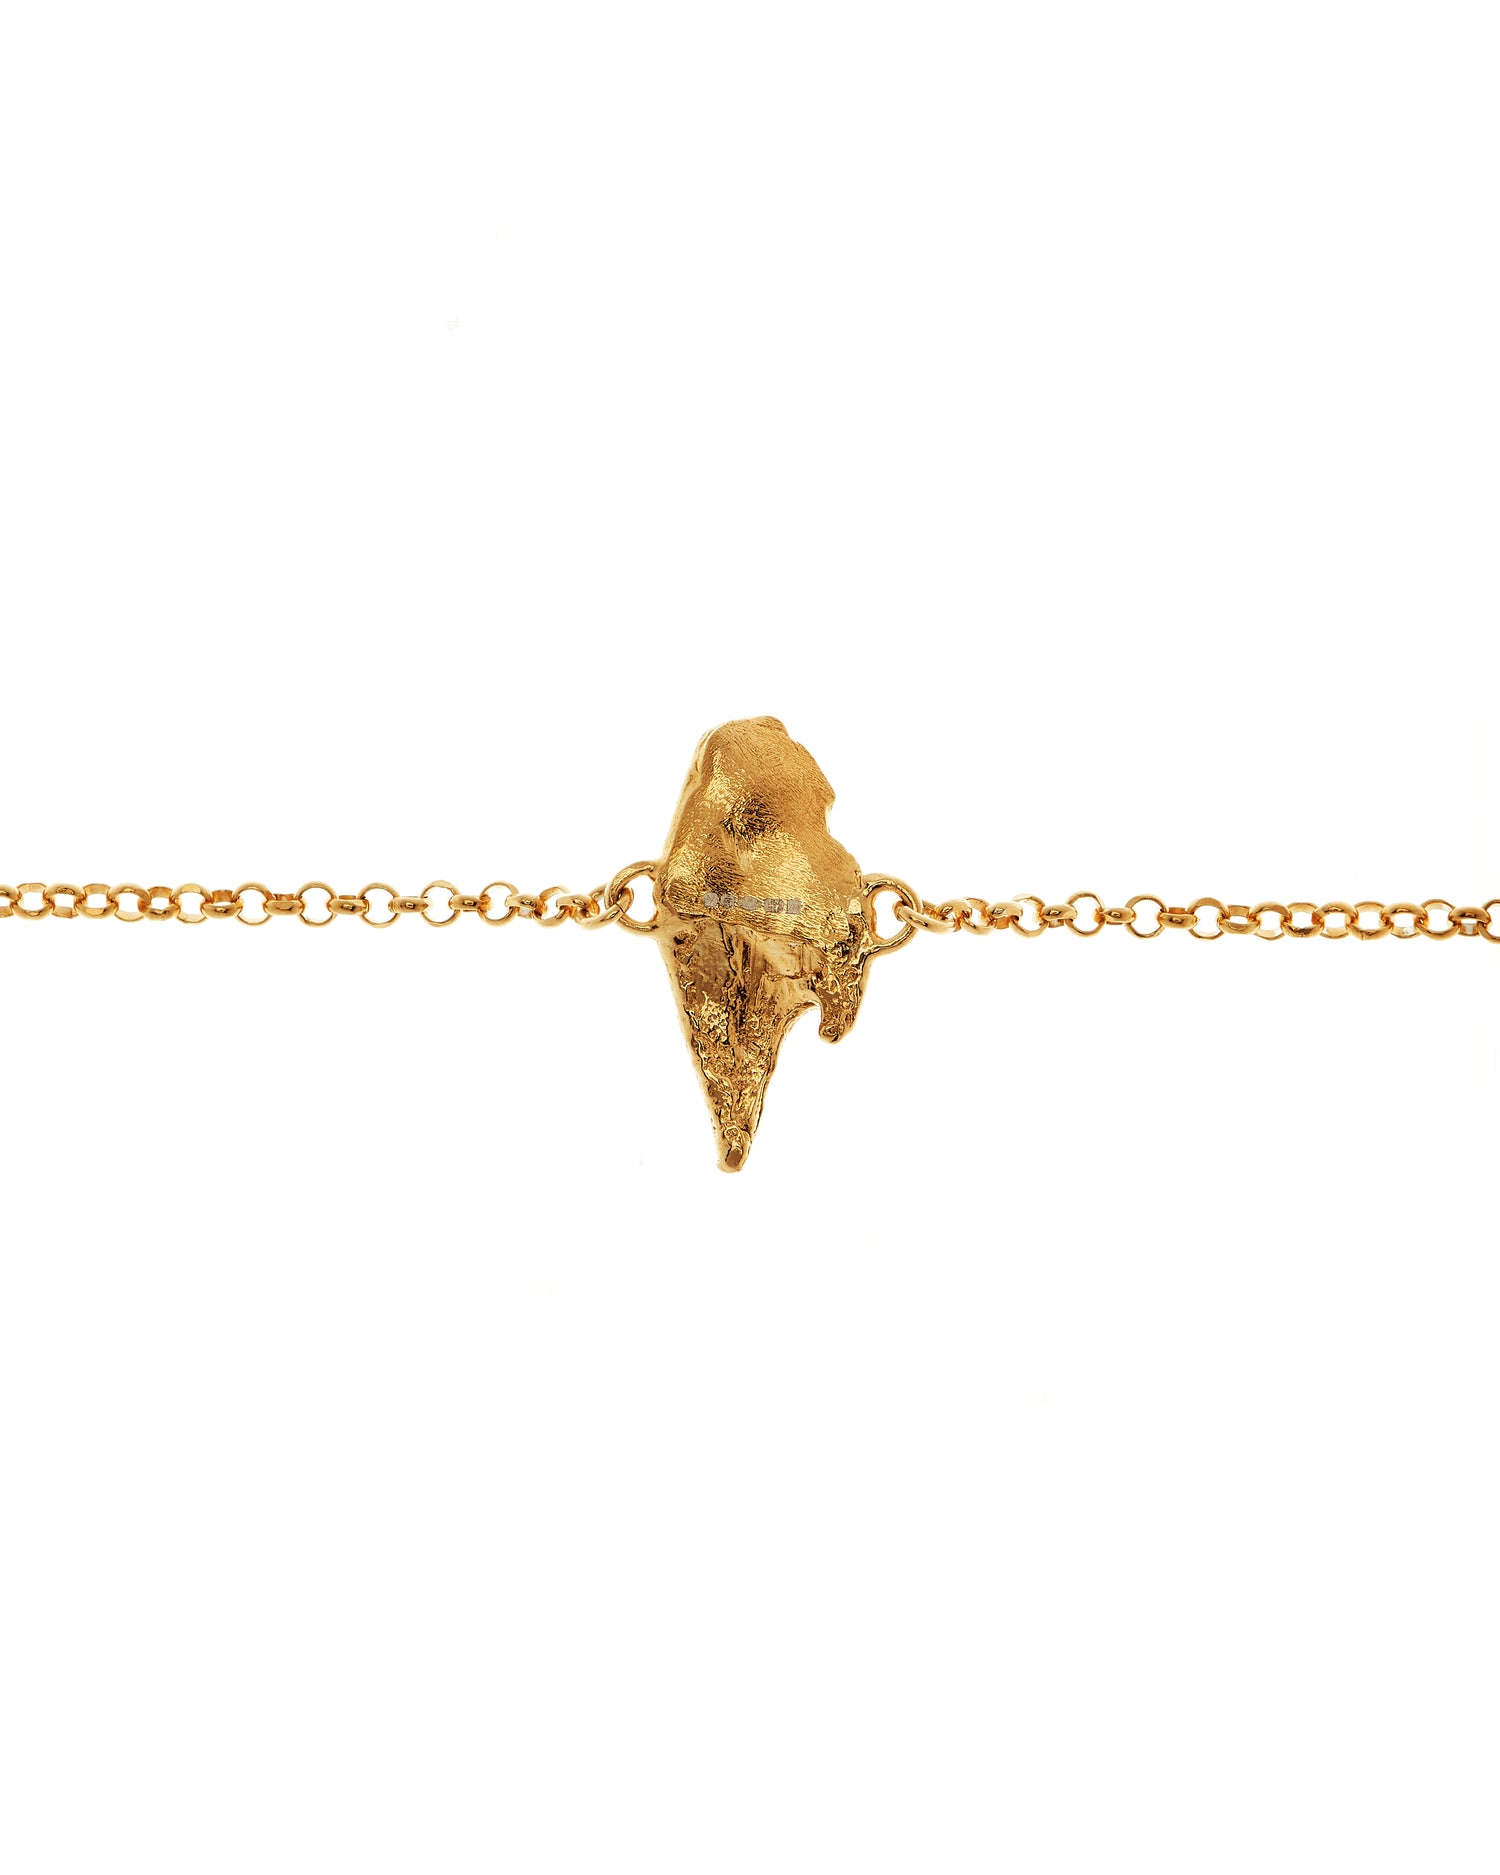 Gold textured belcher chain pendant